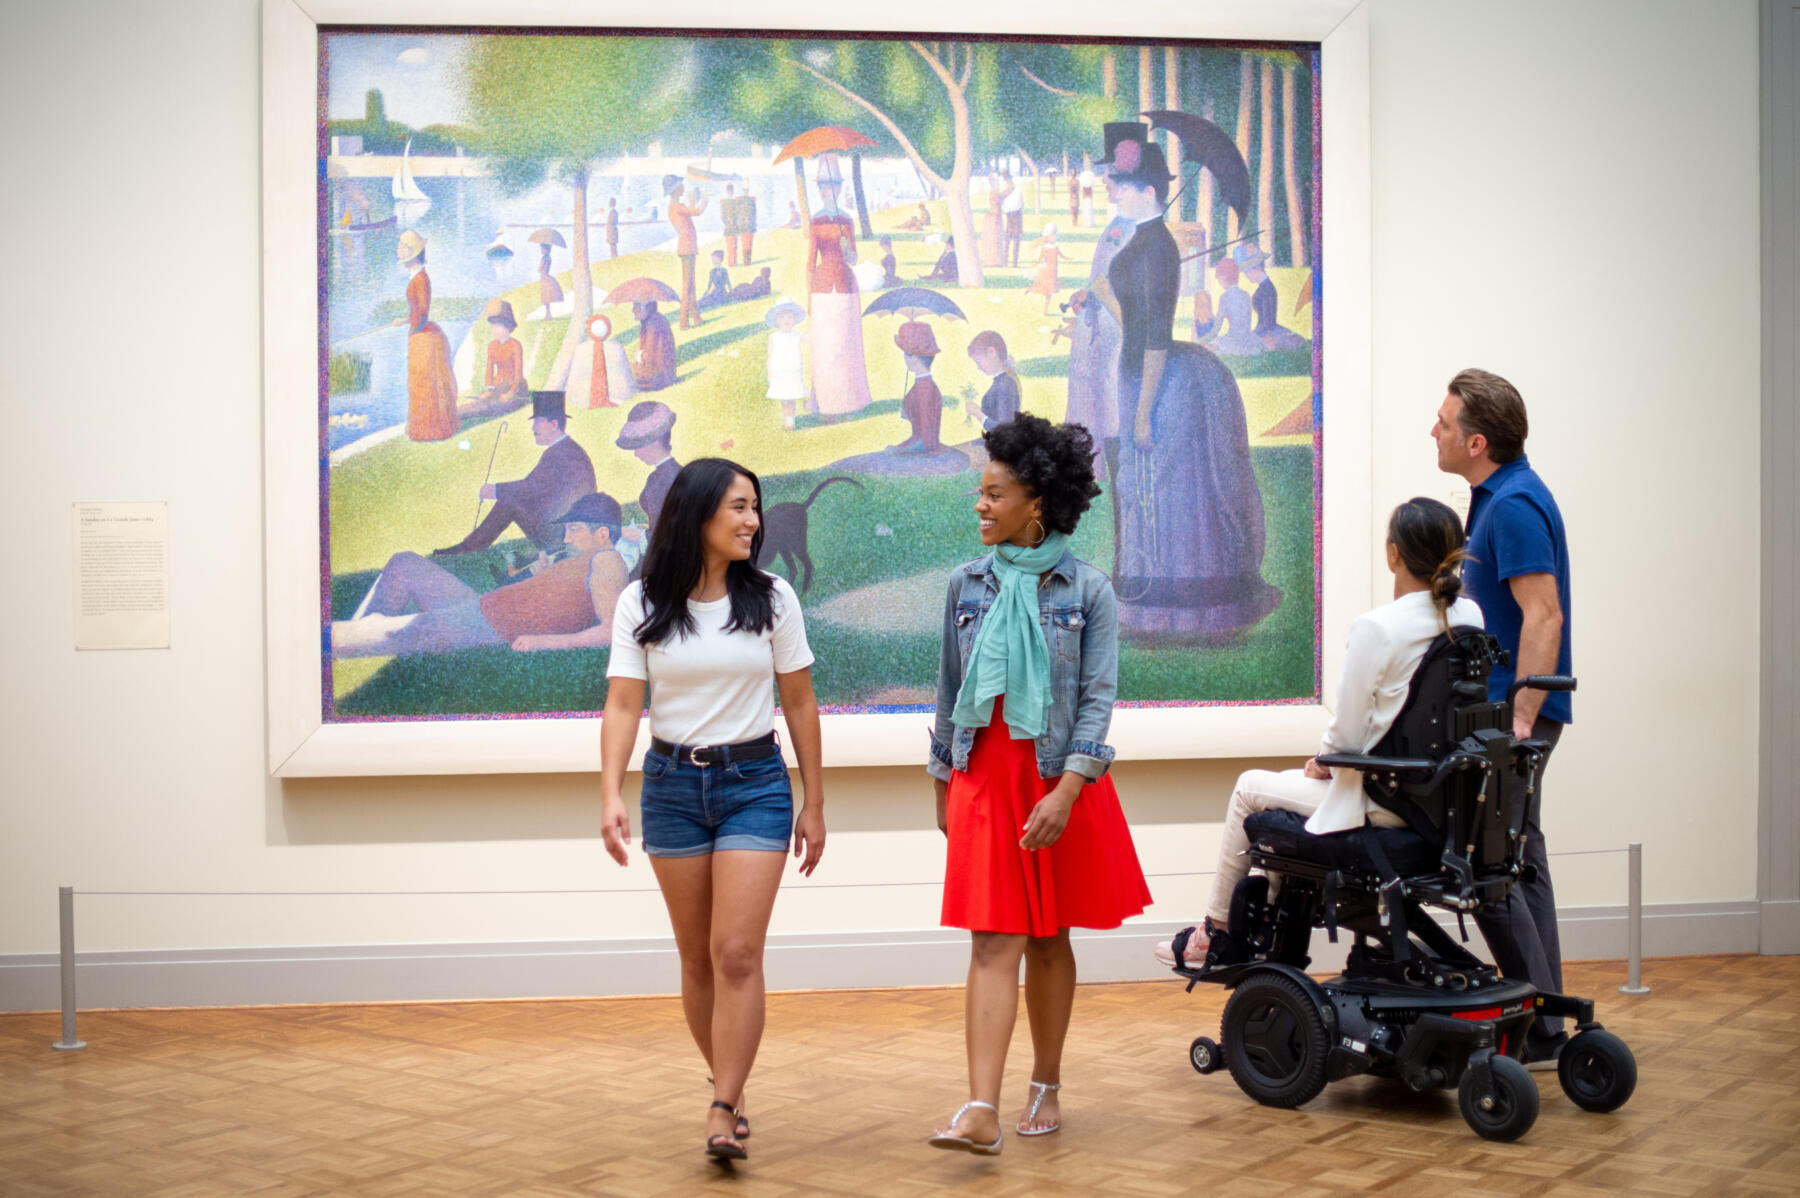 Friends admire art at the Art Institute of Chicago